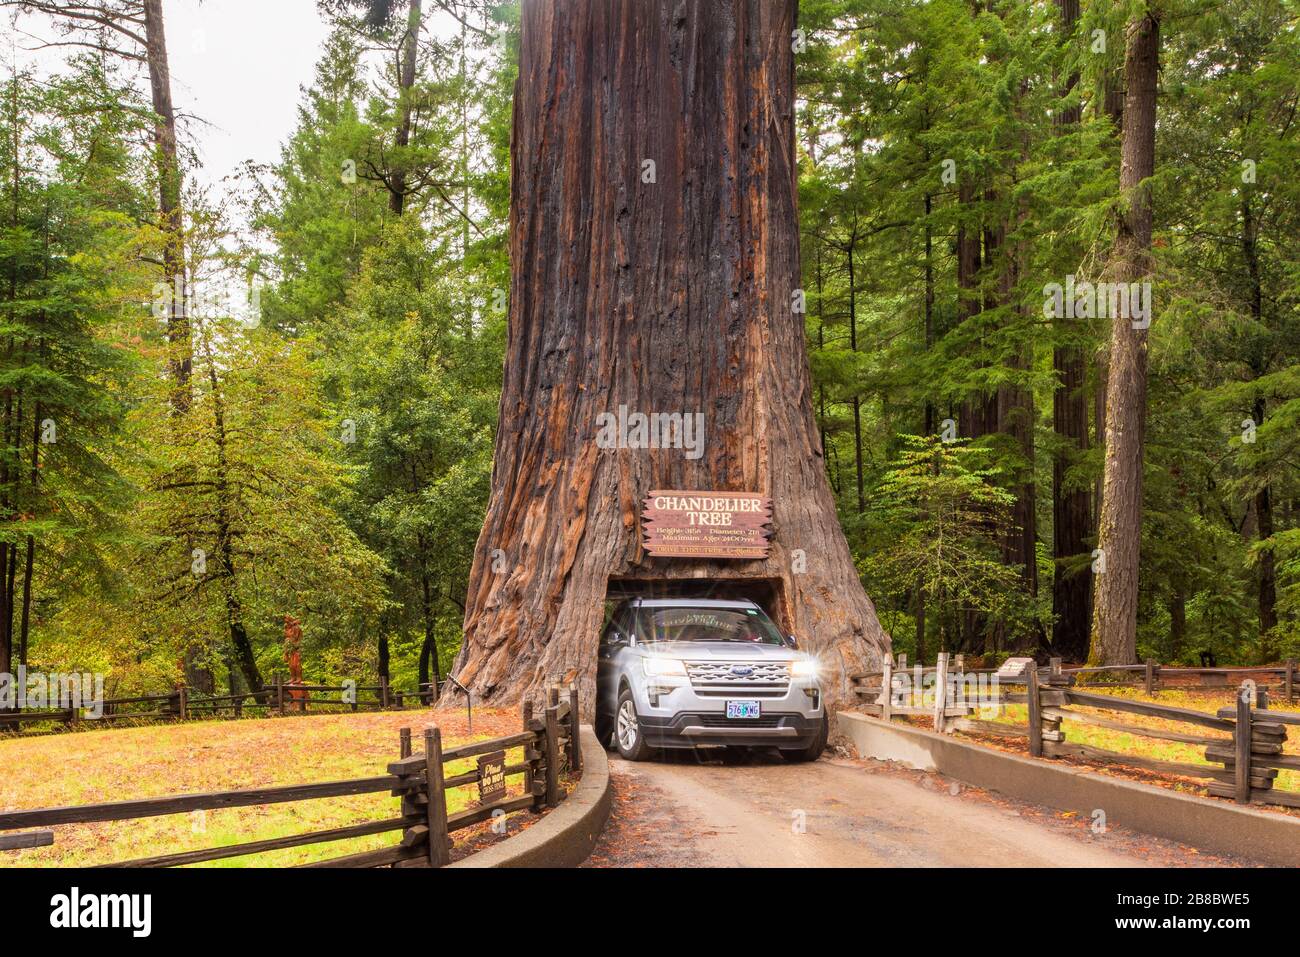 Chandelier Drive Through Tree in Leggett California USA Stock Photo